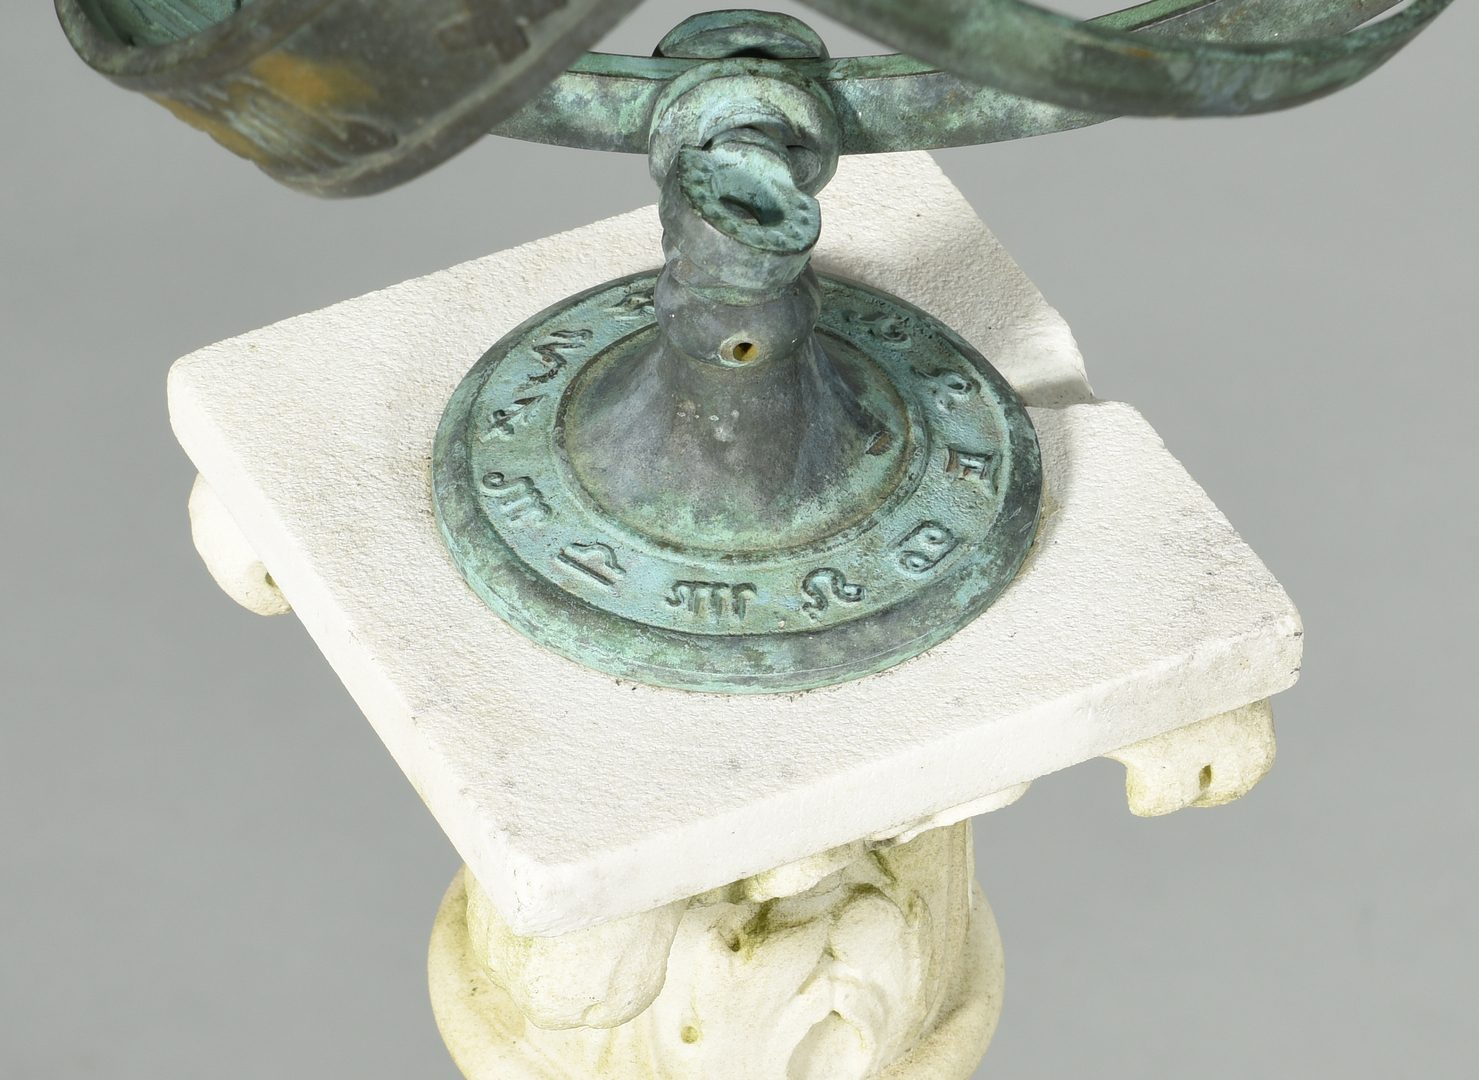 Lot 605: Armillary Sphere on Marble Pedestal